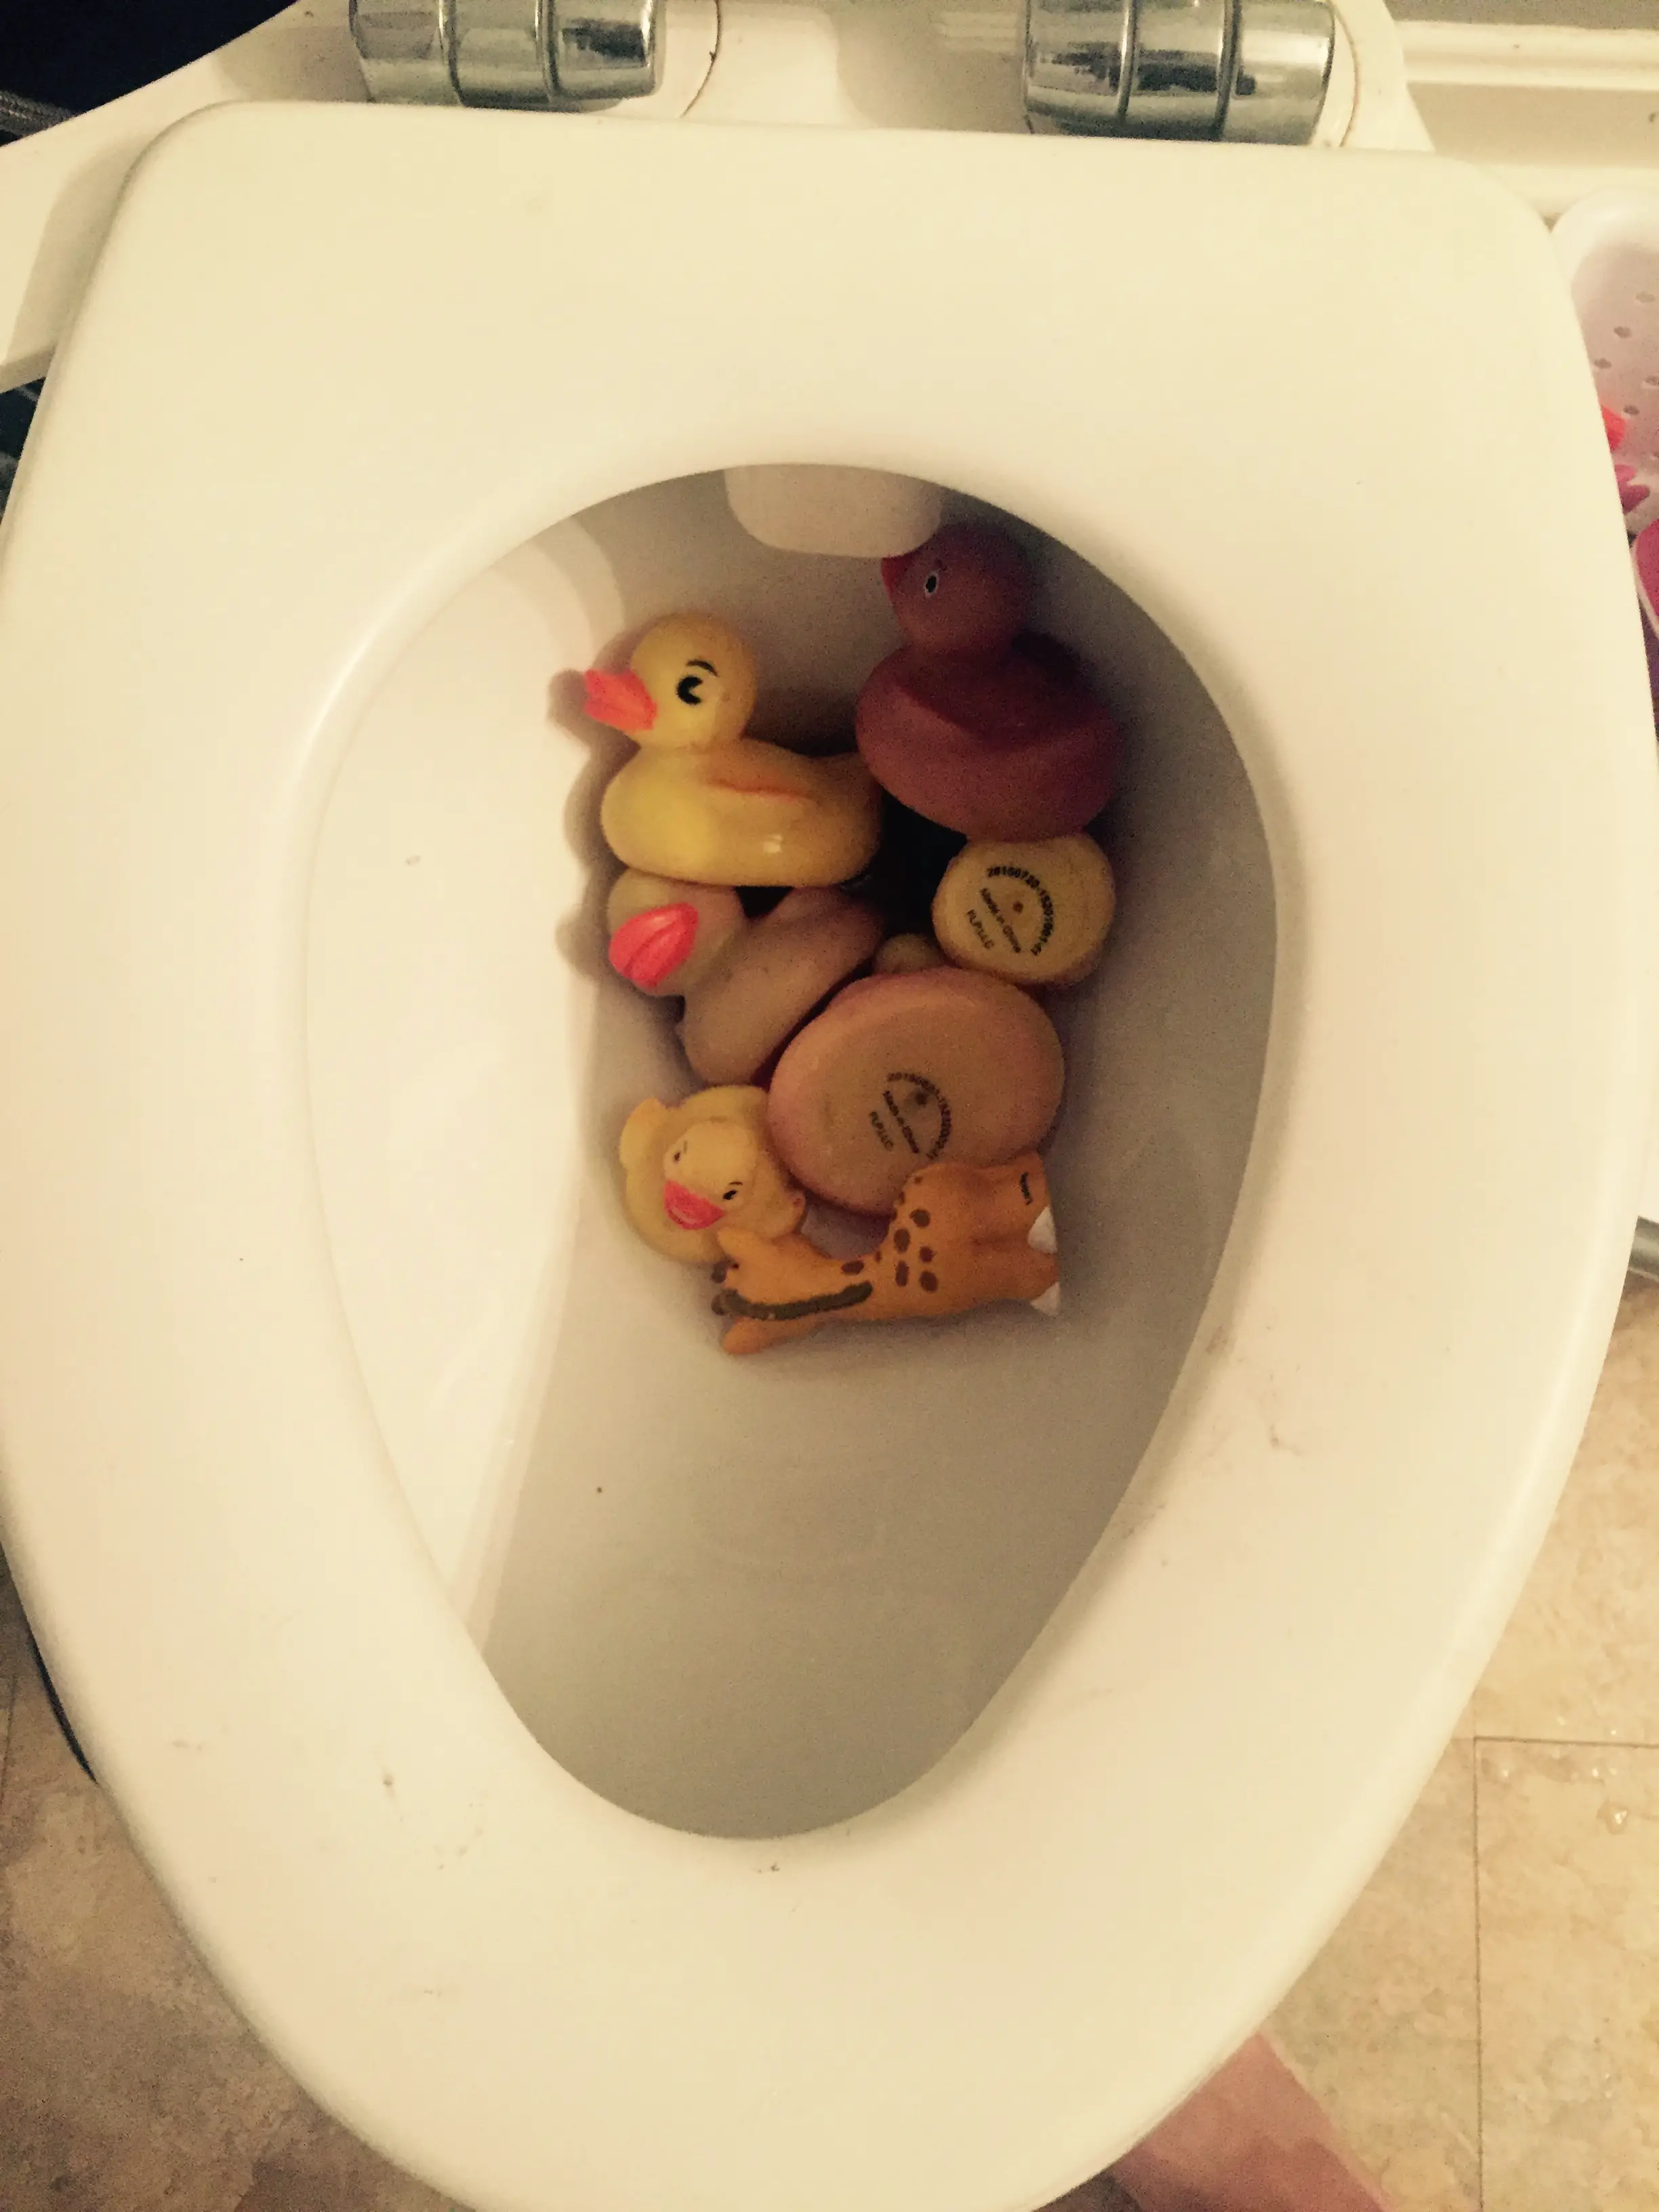 Toys in Toilet